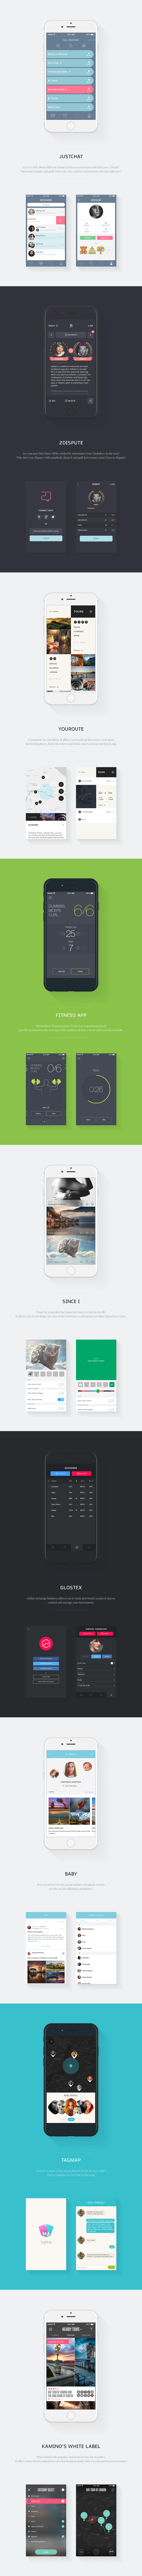 UI ux ux design 2015 app iphone apple watch trend simple clean portfolio sketch free